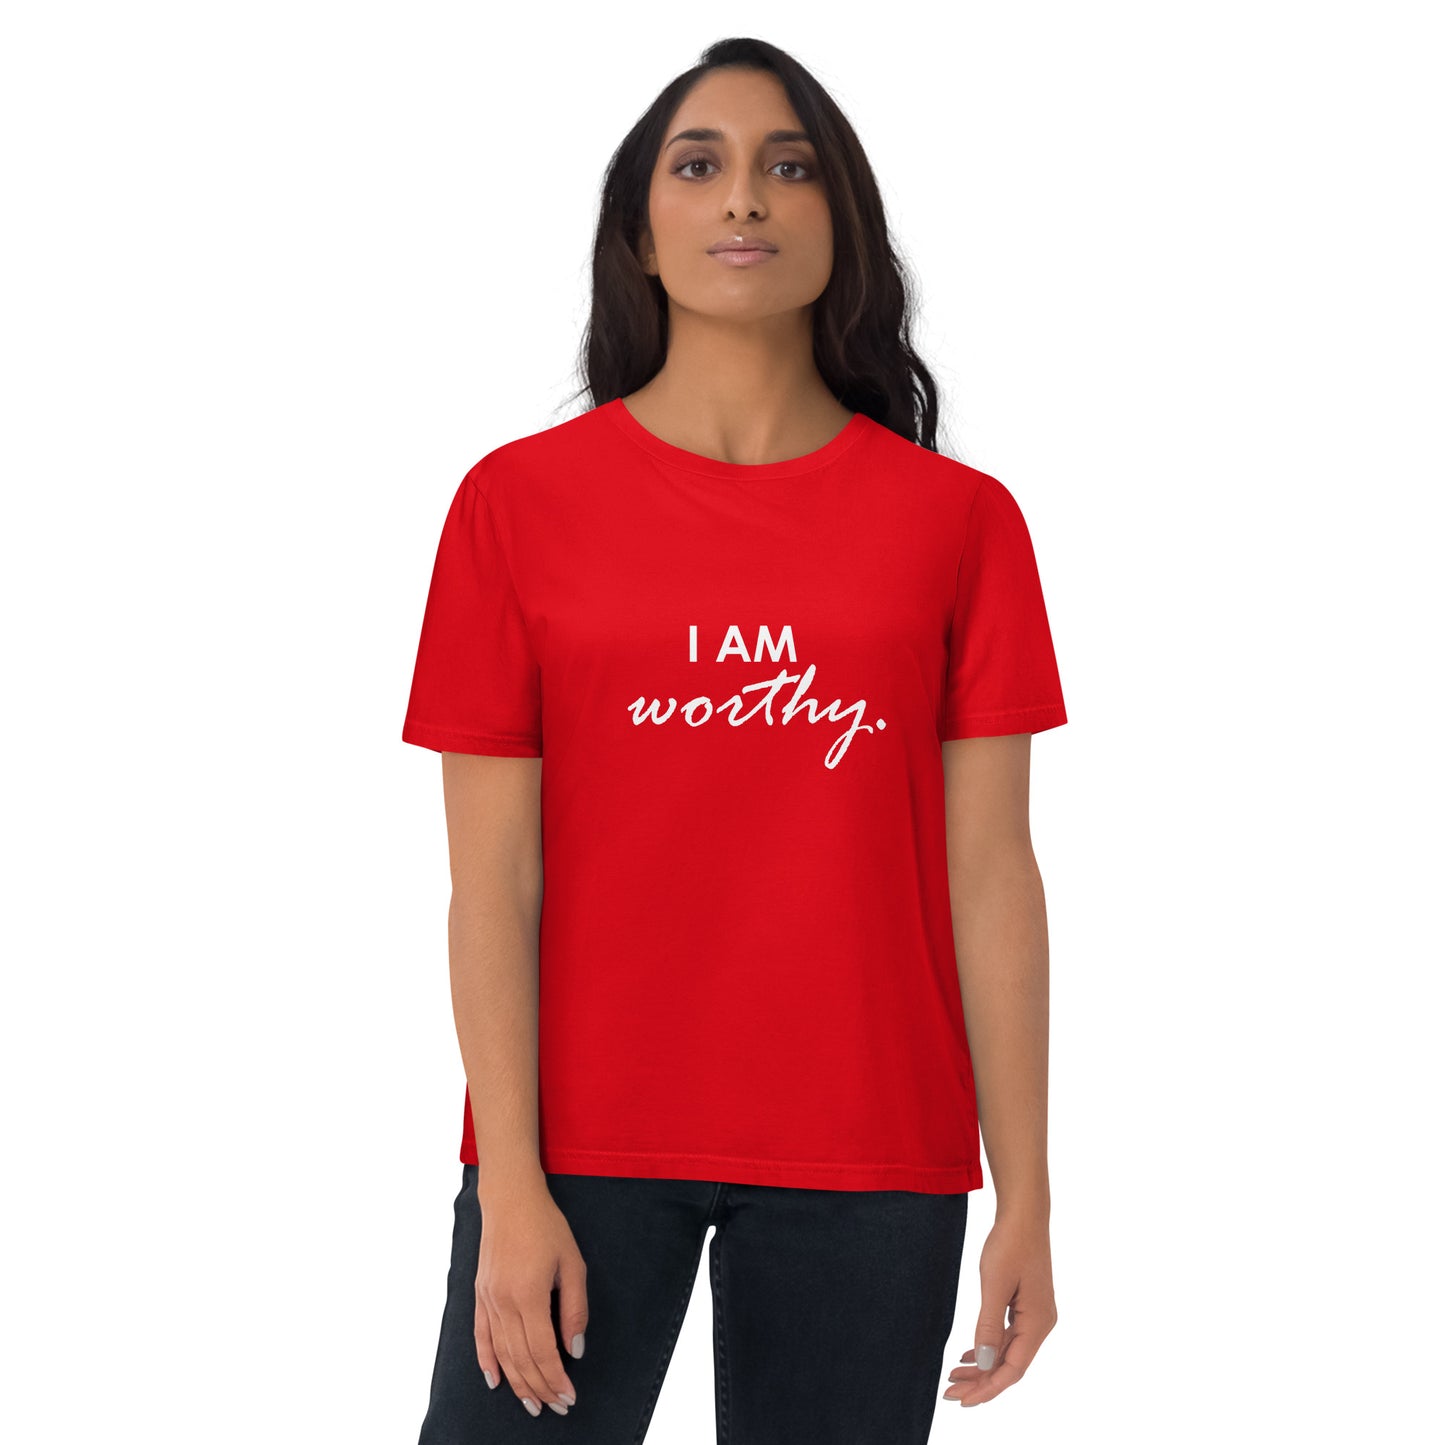 I AM WORTHY - Unisex organic cotton t-shirt